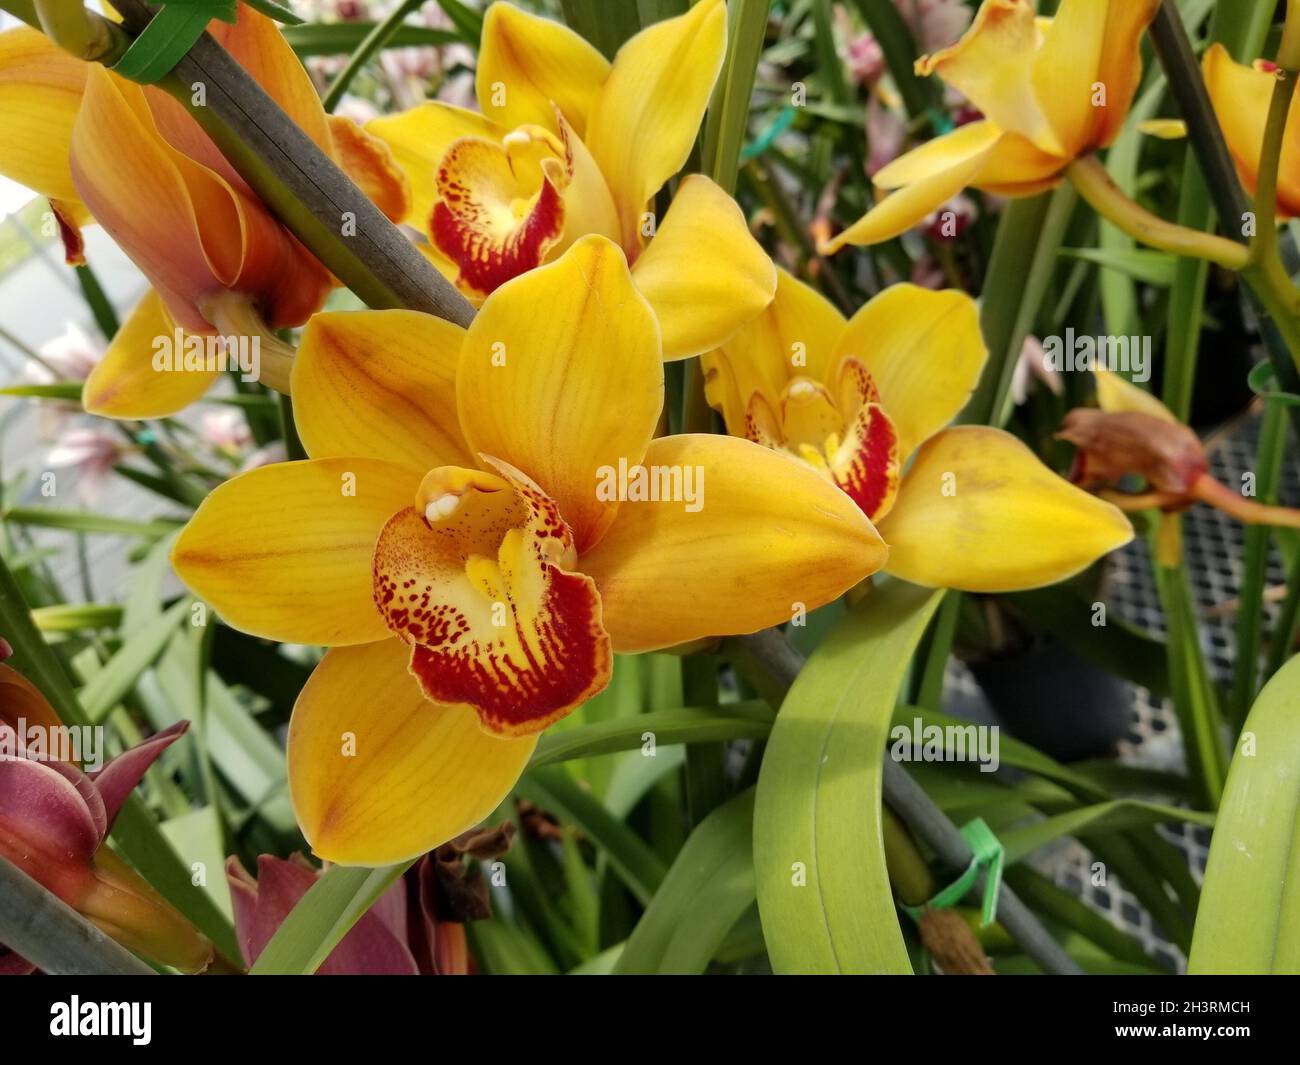 Closeup shot of orange Cymbidium aloelistic flowers growing in the garden Stock Photo